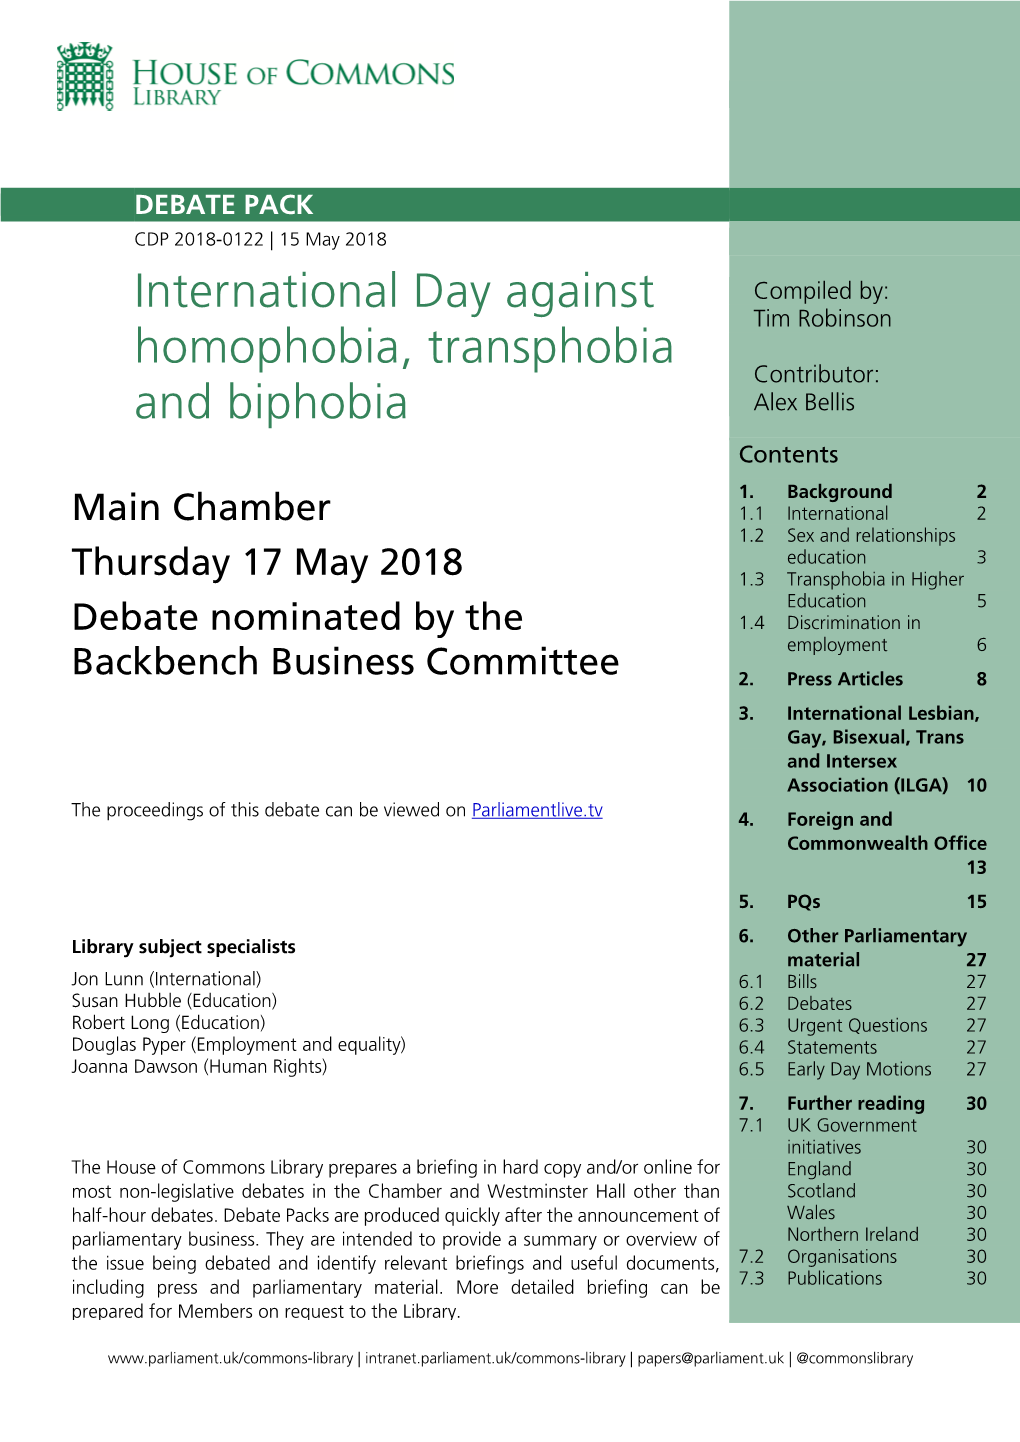 International Day Against Homophobia, Transphobia and Biphobia 3